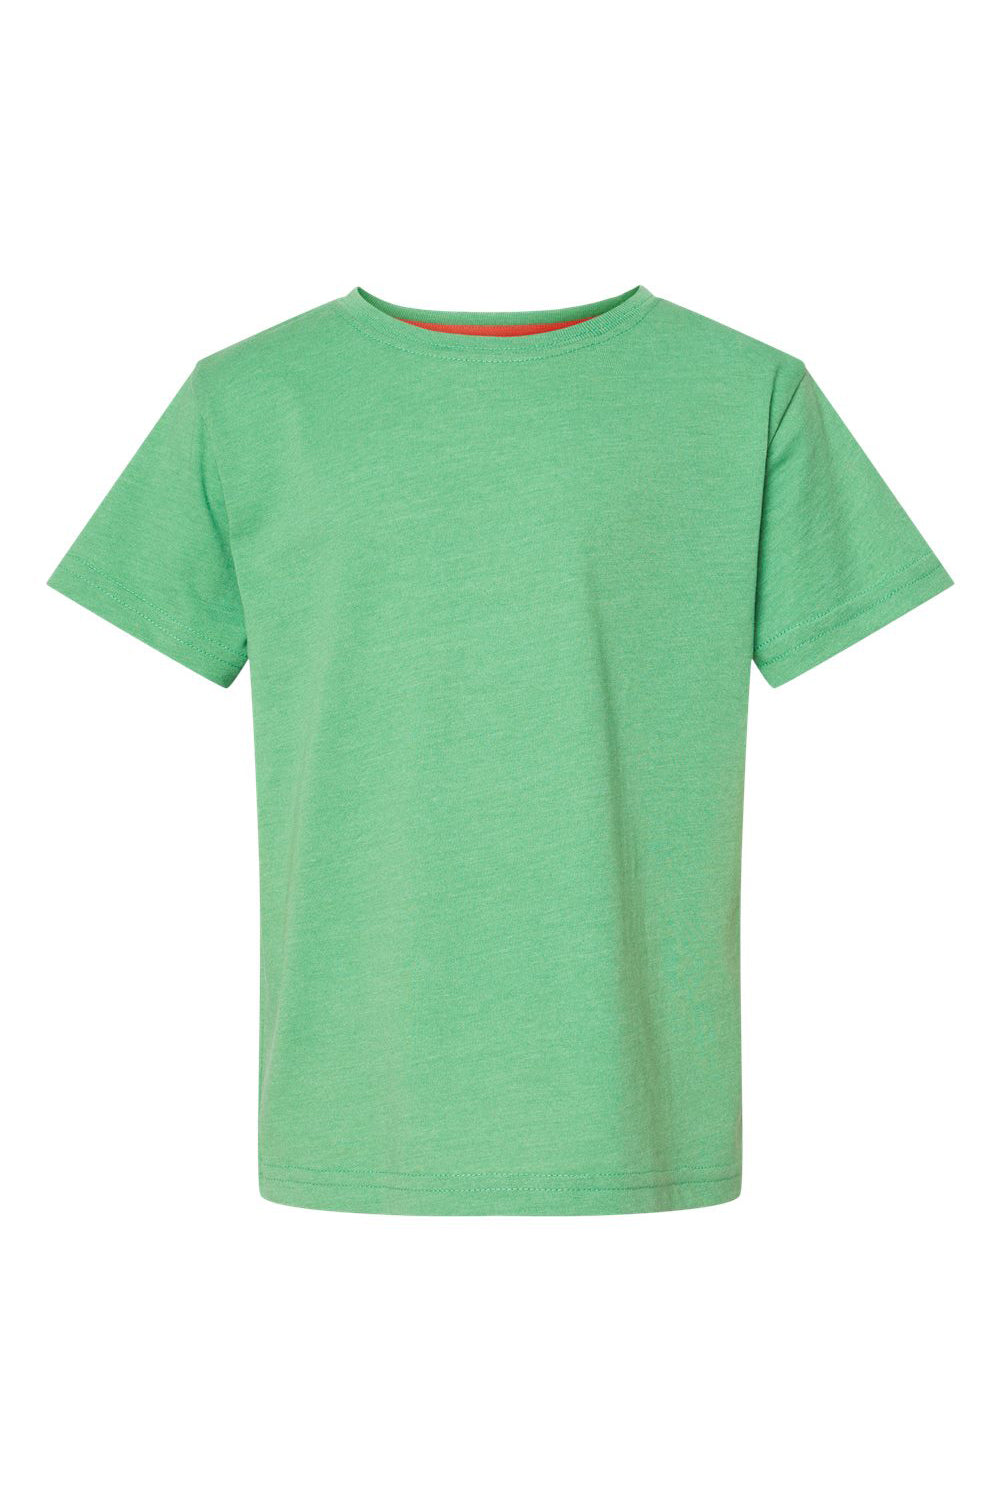 Kastlfel 2015 Youth RecycledSoft Short Sleeve Crewneck T-Shirt Green Flat Front